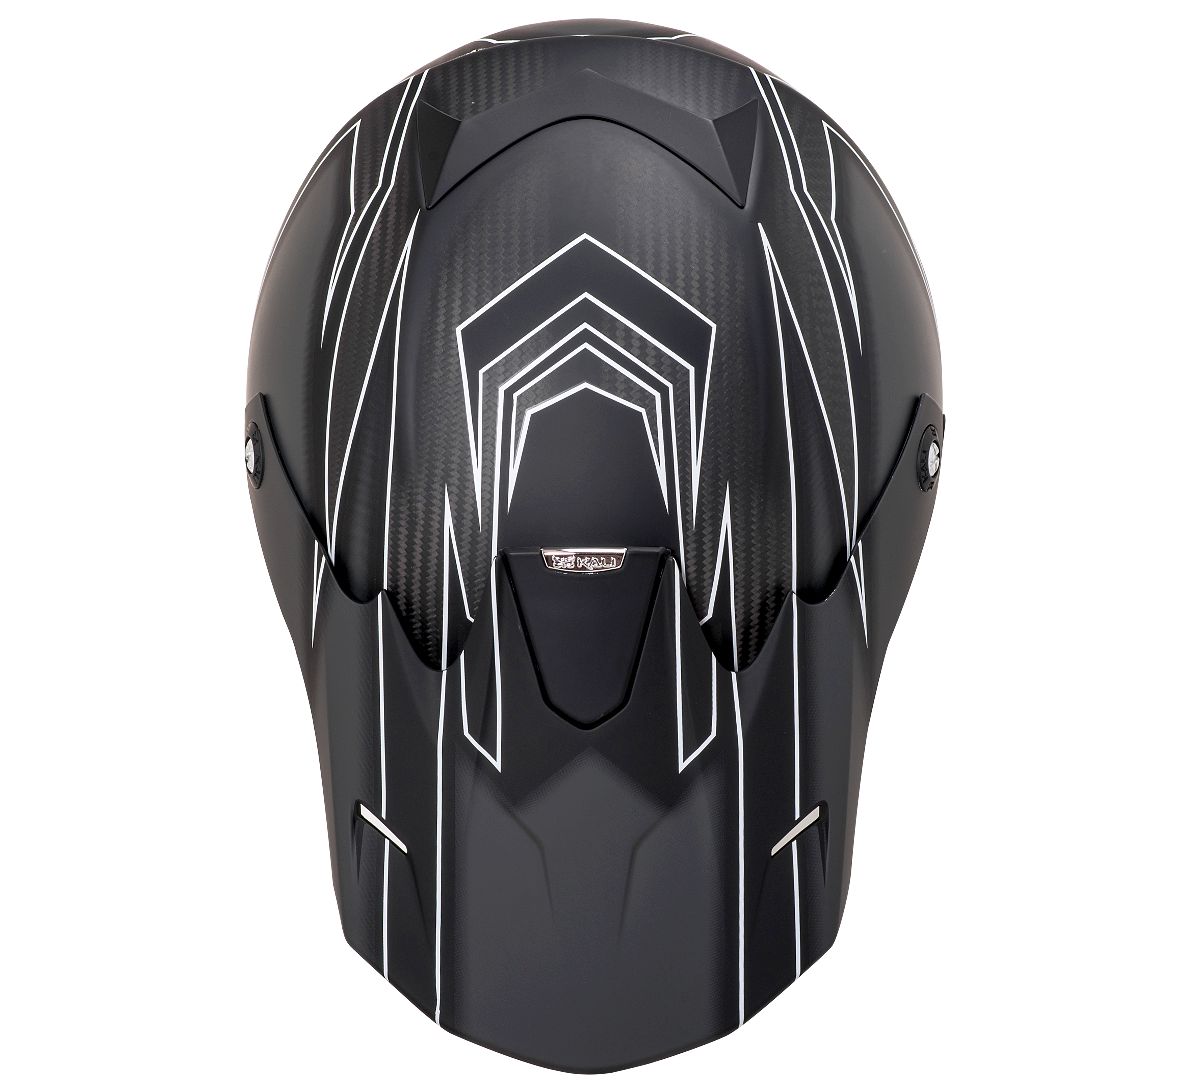 Kali Protectives Prana Carbon Holeshot Off Road Bike & Motorcycle Helmet  (S – XL)